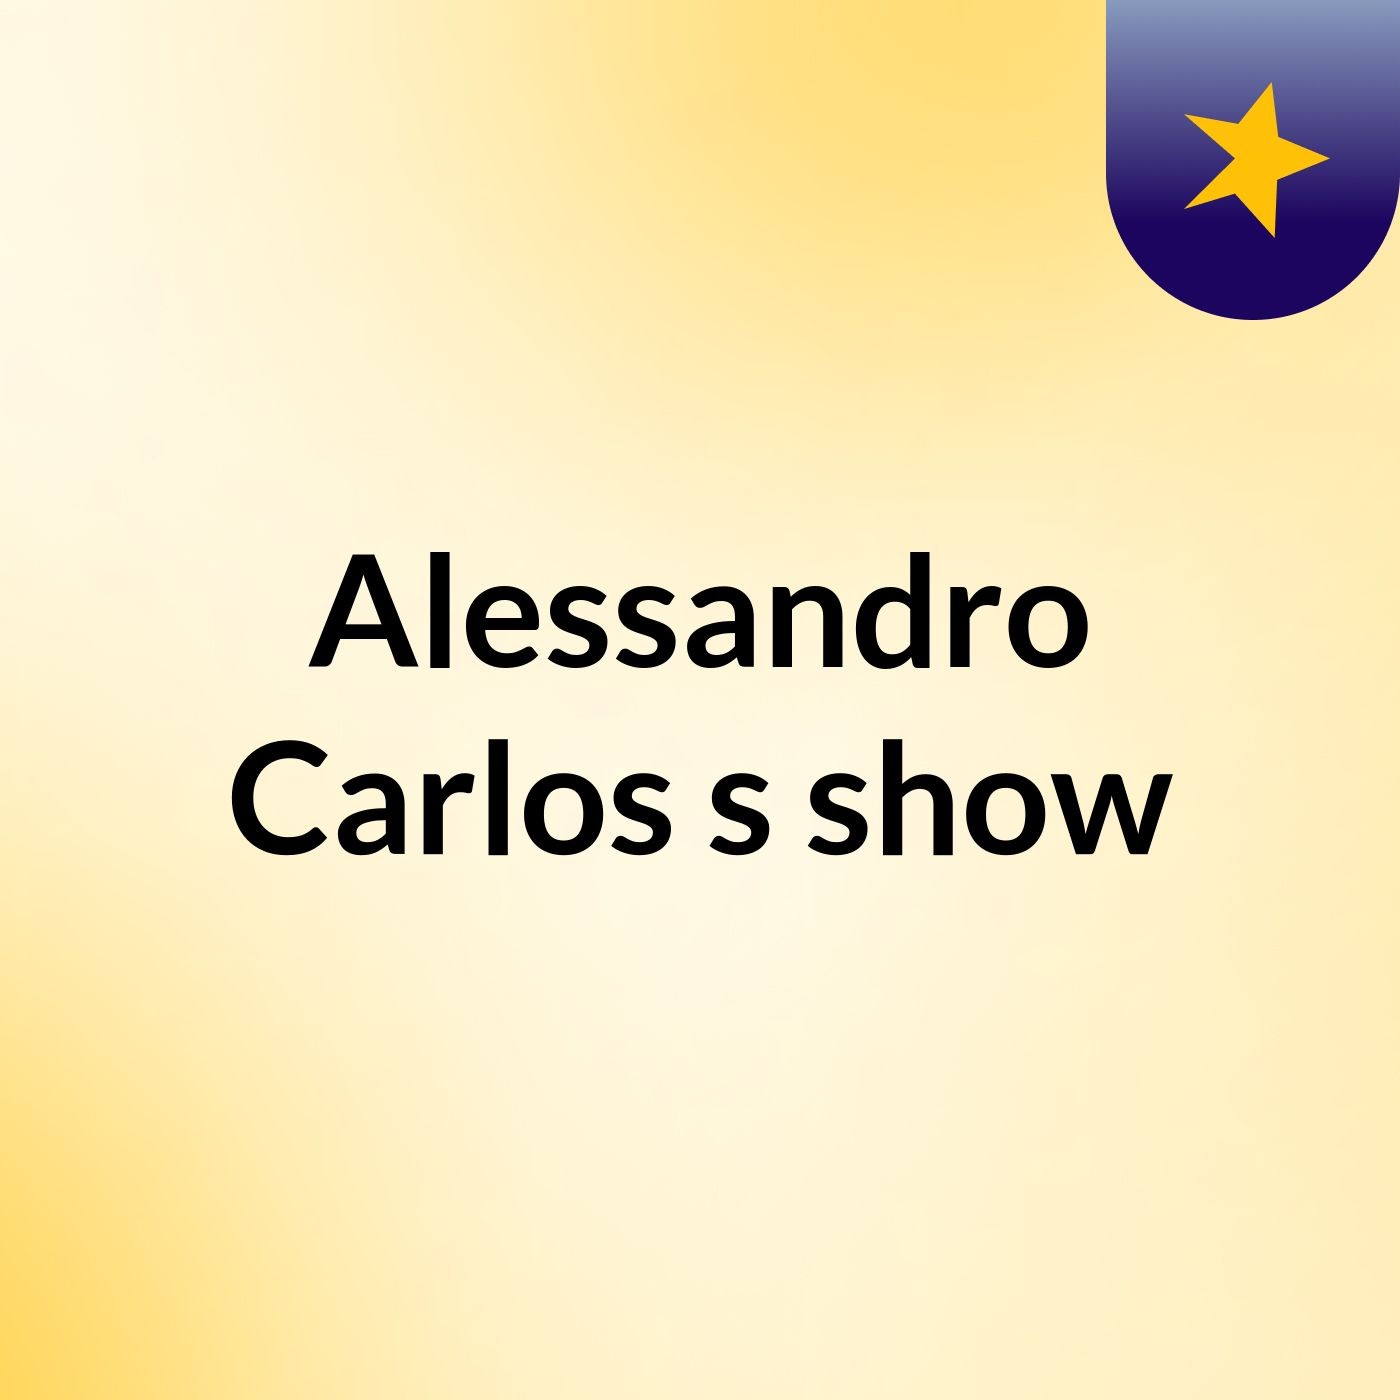 Alessandro Carlos's show